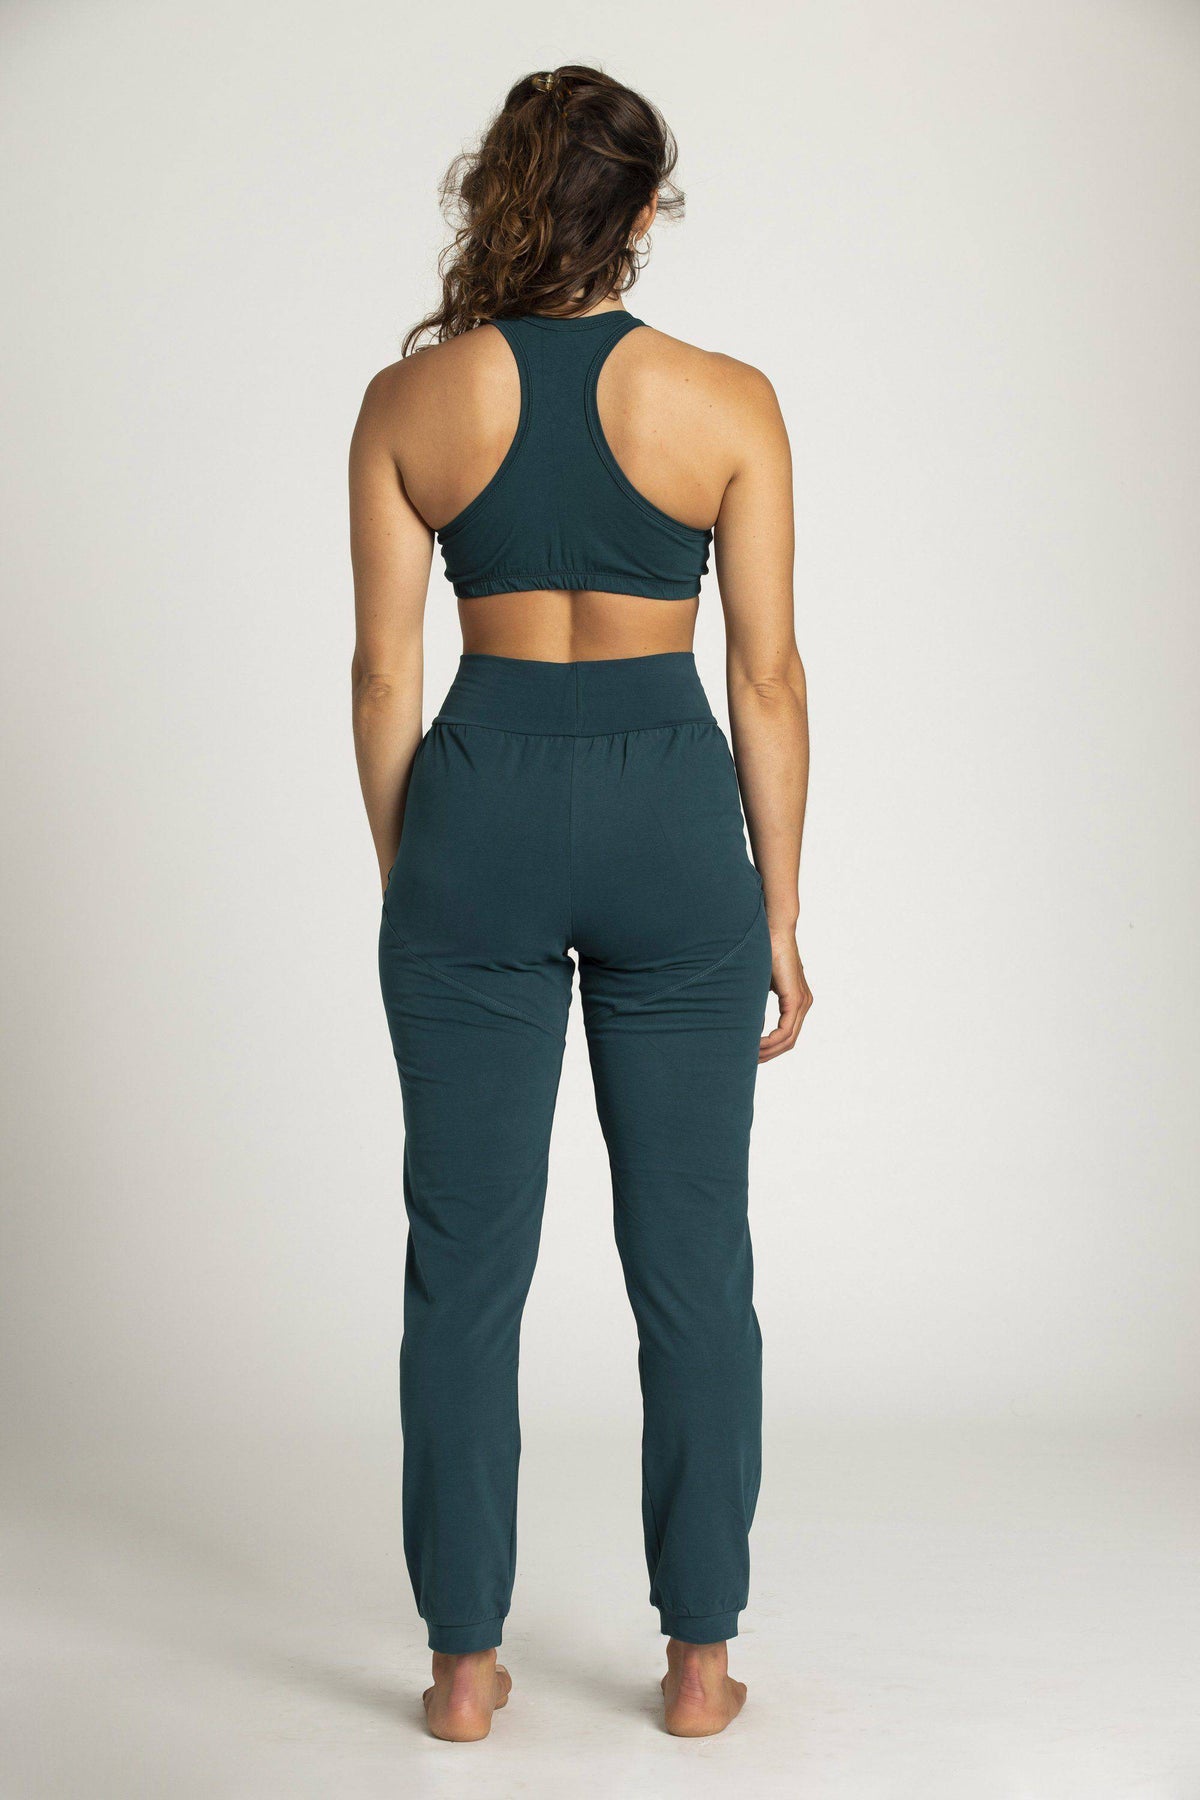 Organic Cotton Unisex Slouchy Pants - womens clothing - Ripple Yoga Wear